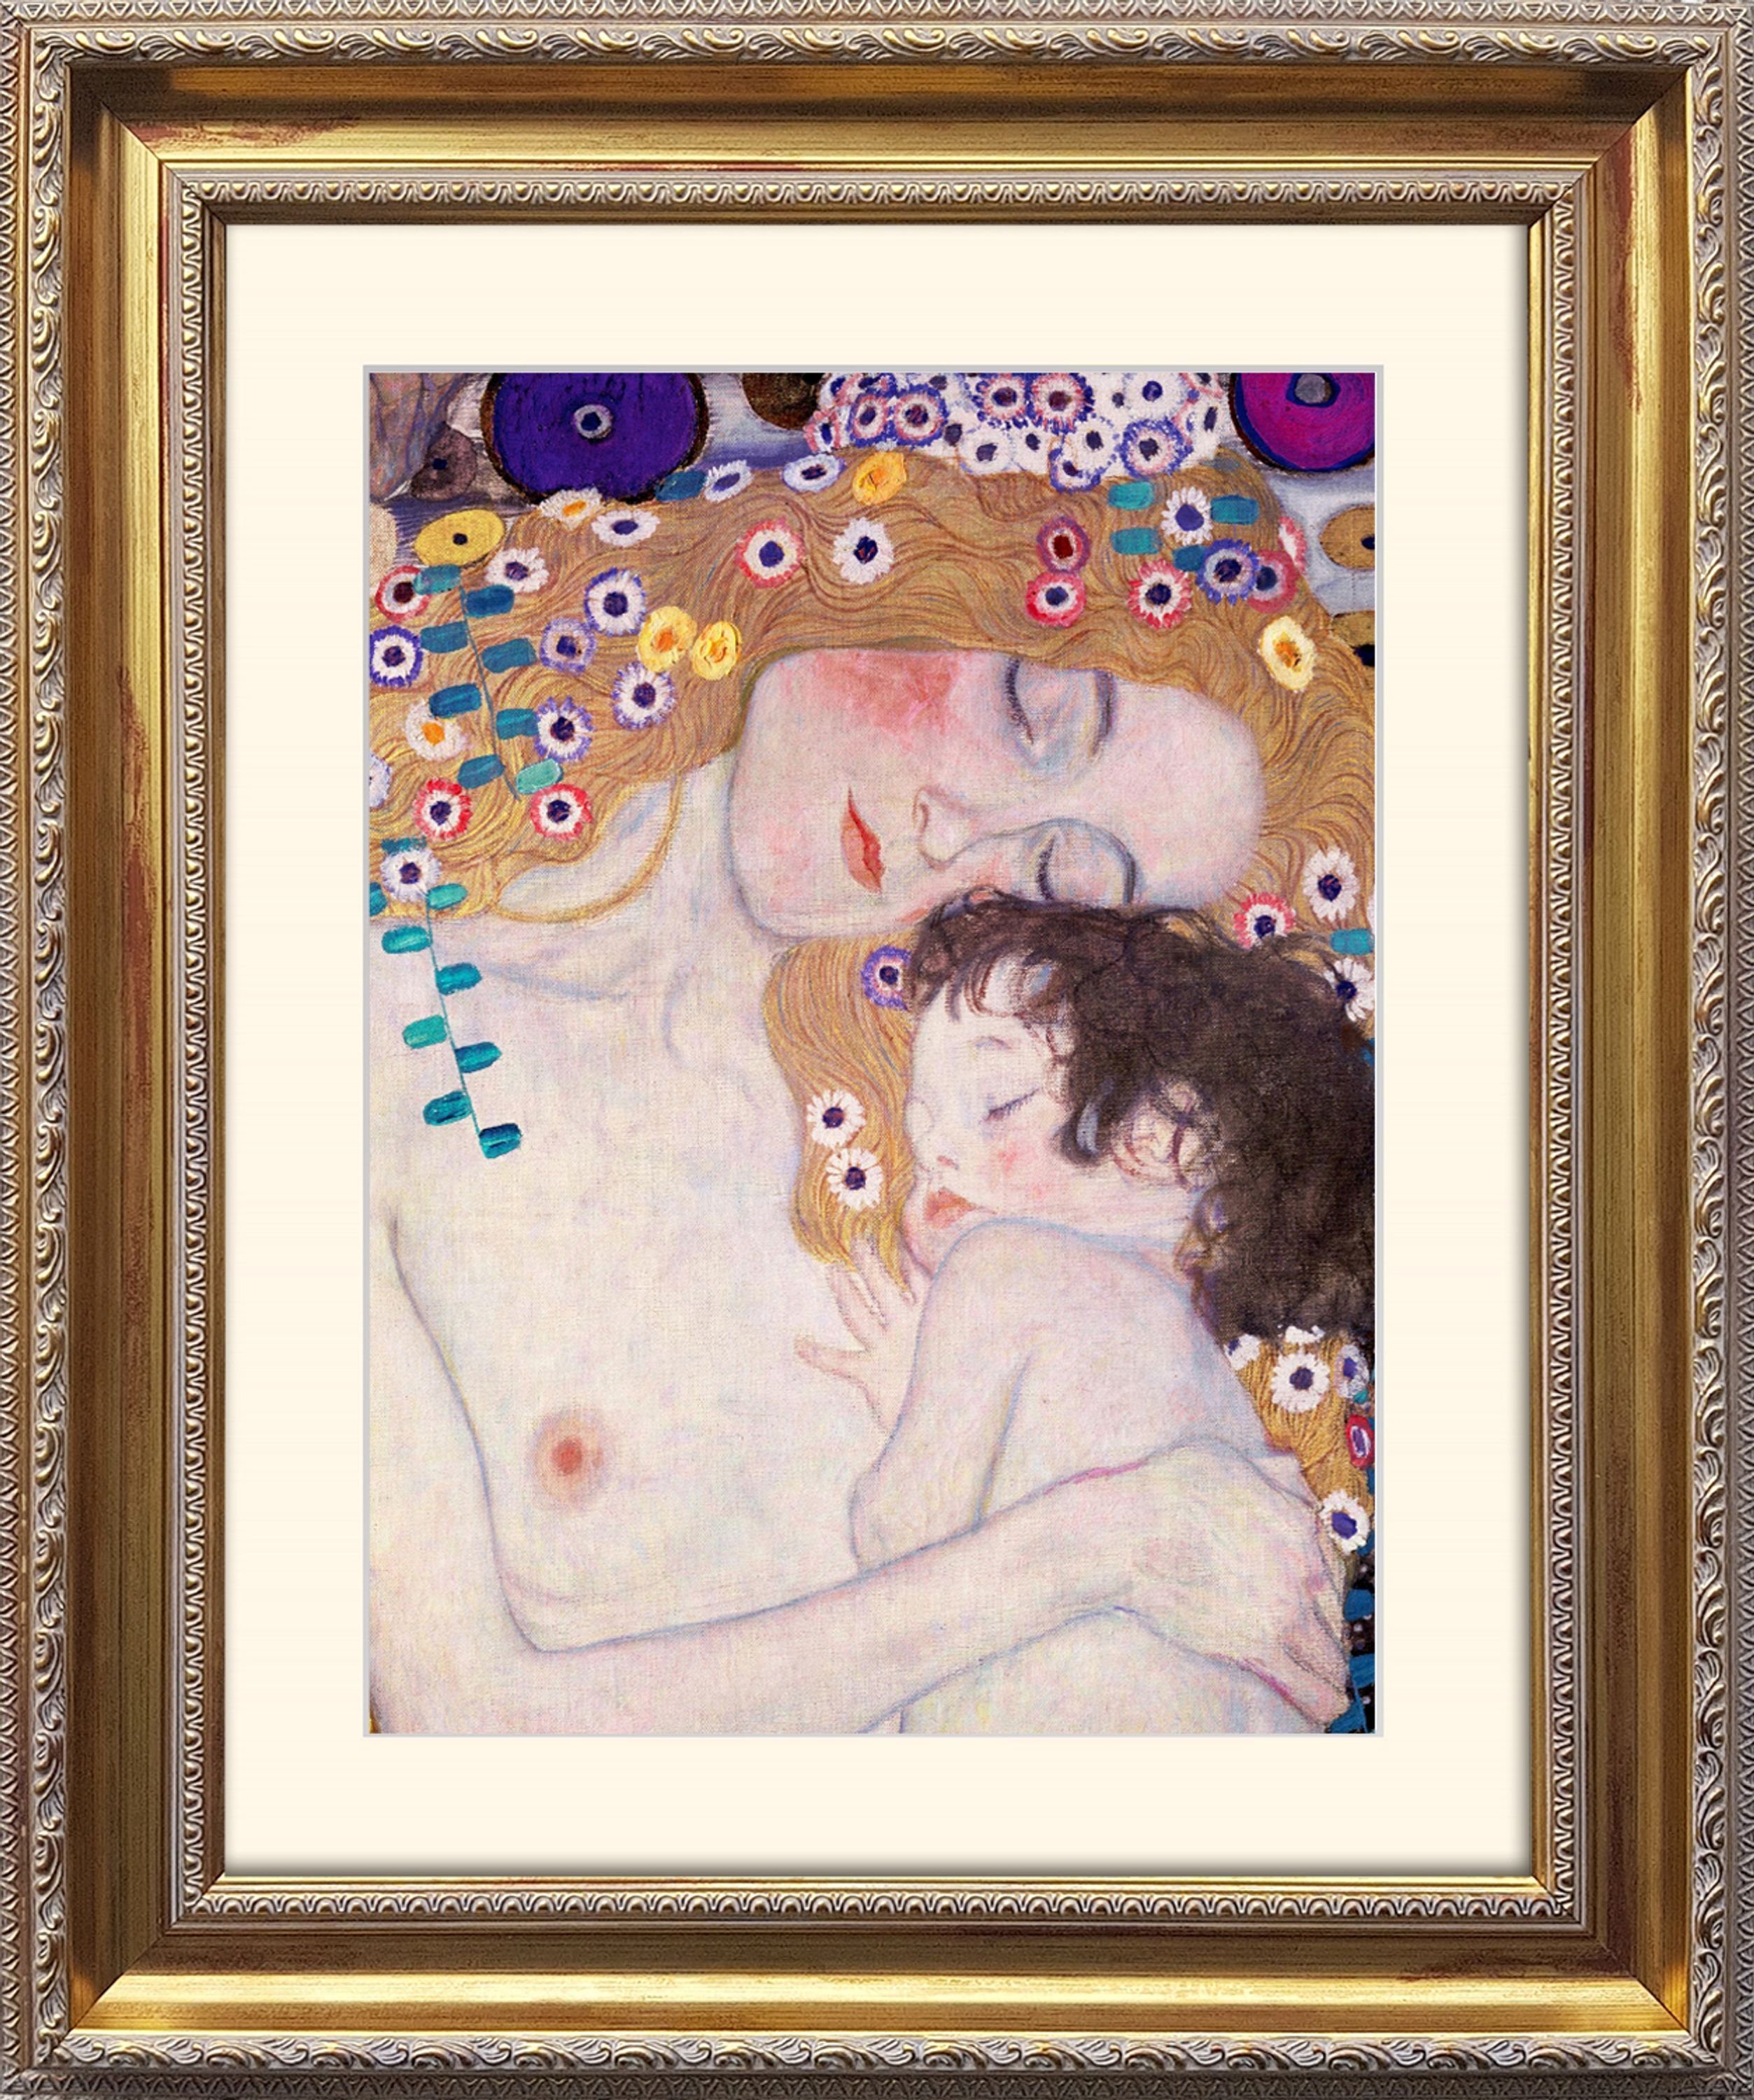 Wandbild, Barock-Rahmen / Klimt gerahmt Le 63x53cm Bild tre artissimo della Bild Gustav Klimt: Rahmen mit donna eta Poster mit /